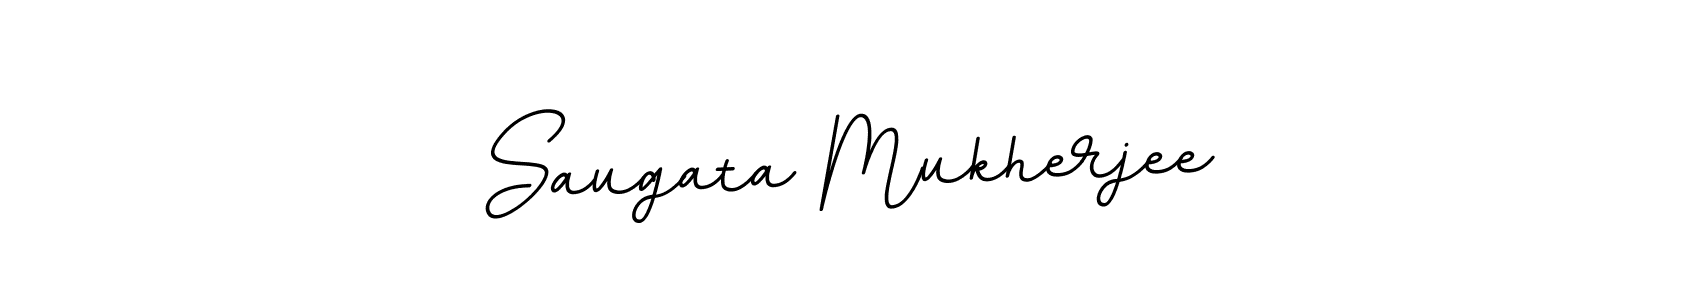 How to Draw Saugata Mukherjee signature style? BallpointsItalic-DORy9 is a latest design signature styles for name Saugata Mukherjee. Saugata Mukherjee signature style 11 images and pictures png